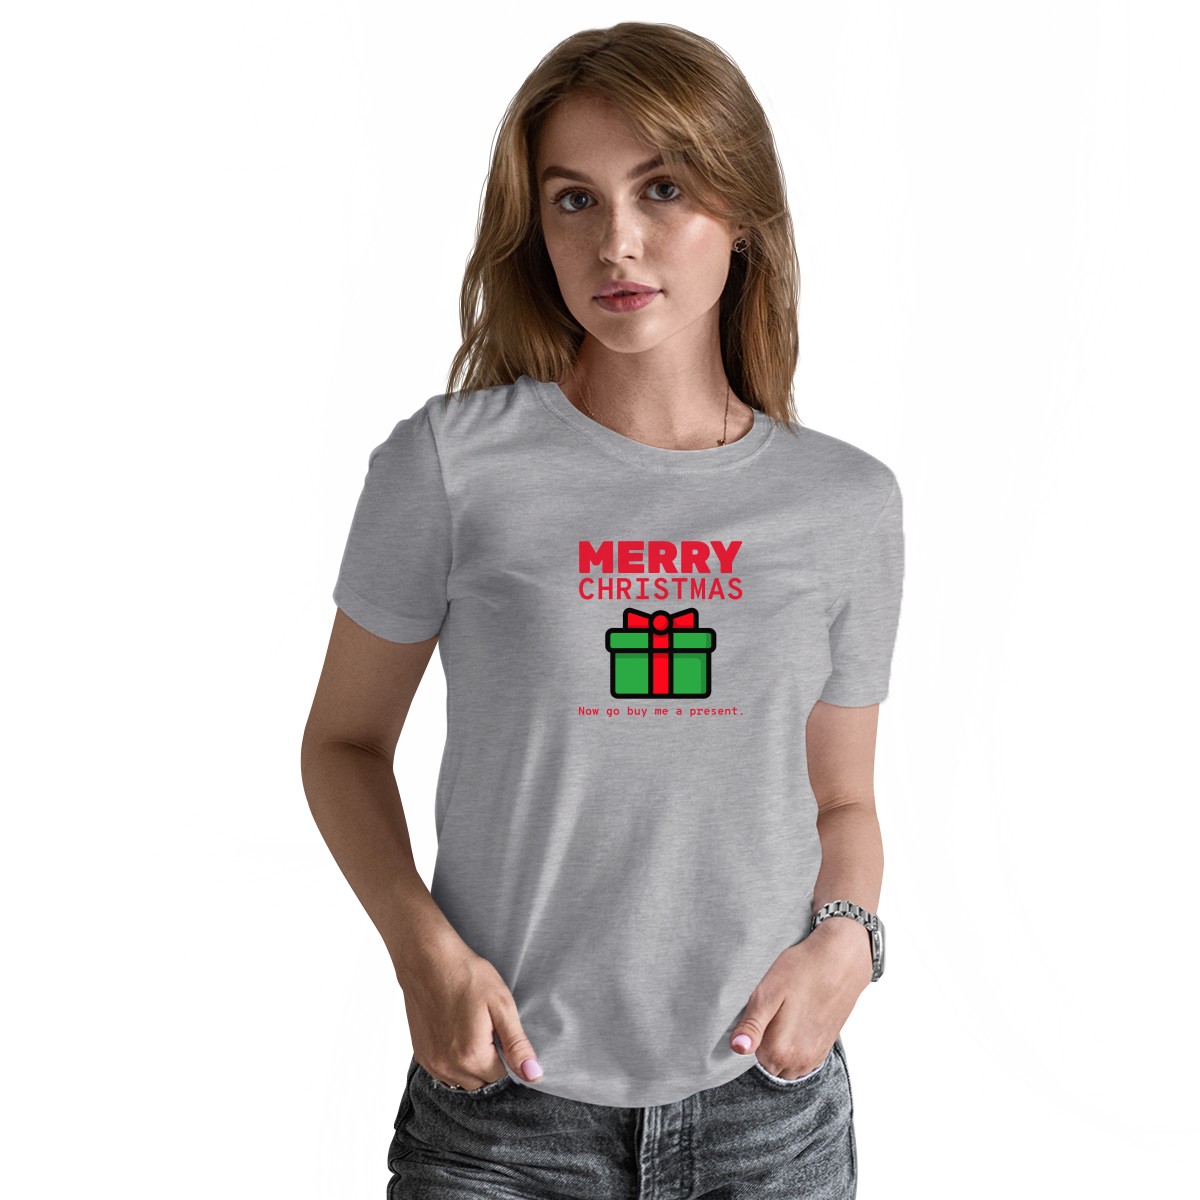 Merry Christmas Now Go Buy Me a Present Women's T-shirt | Gray